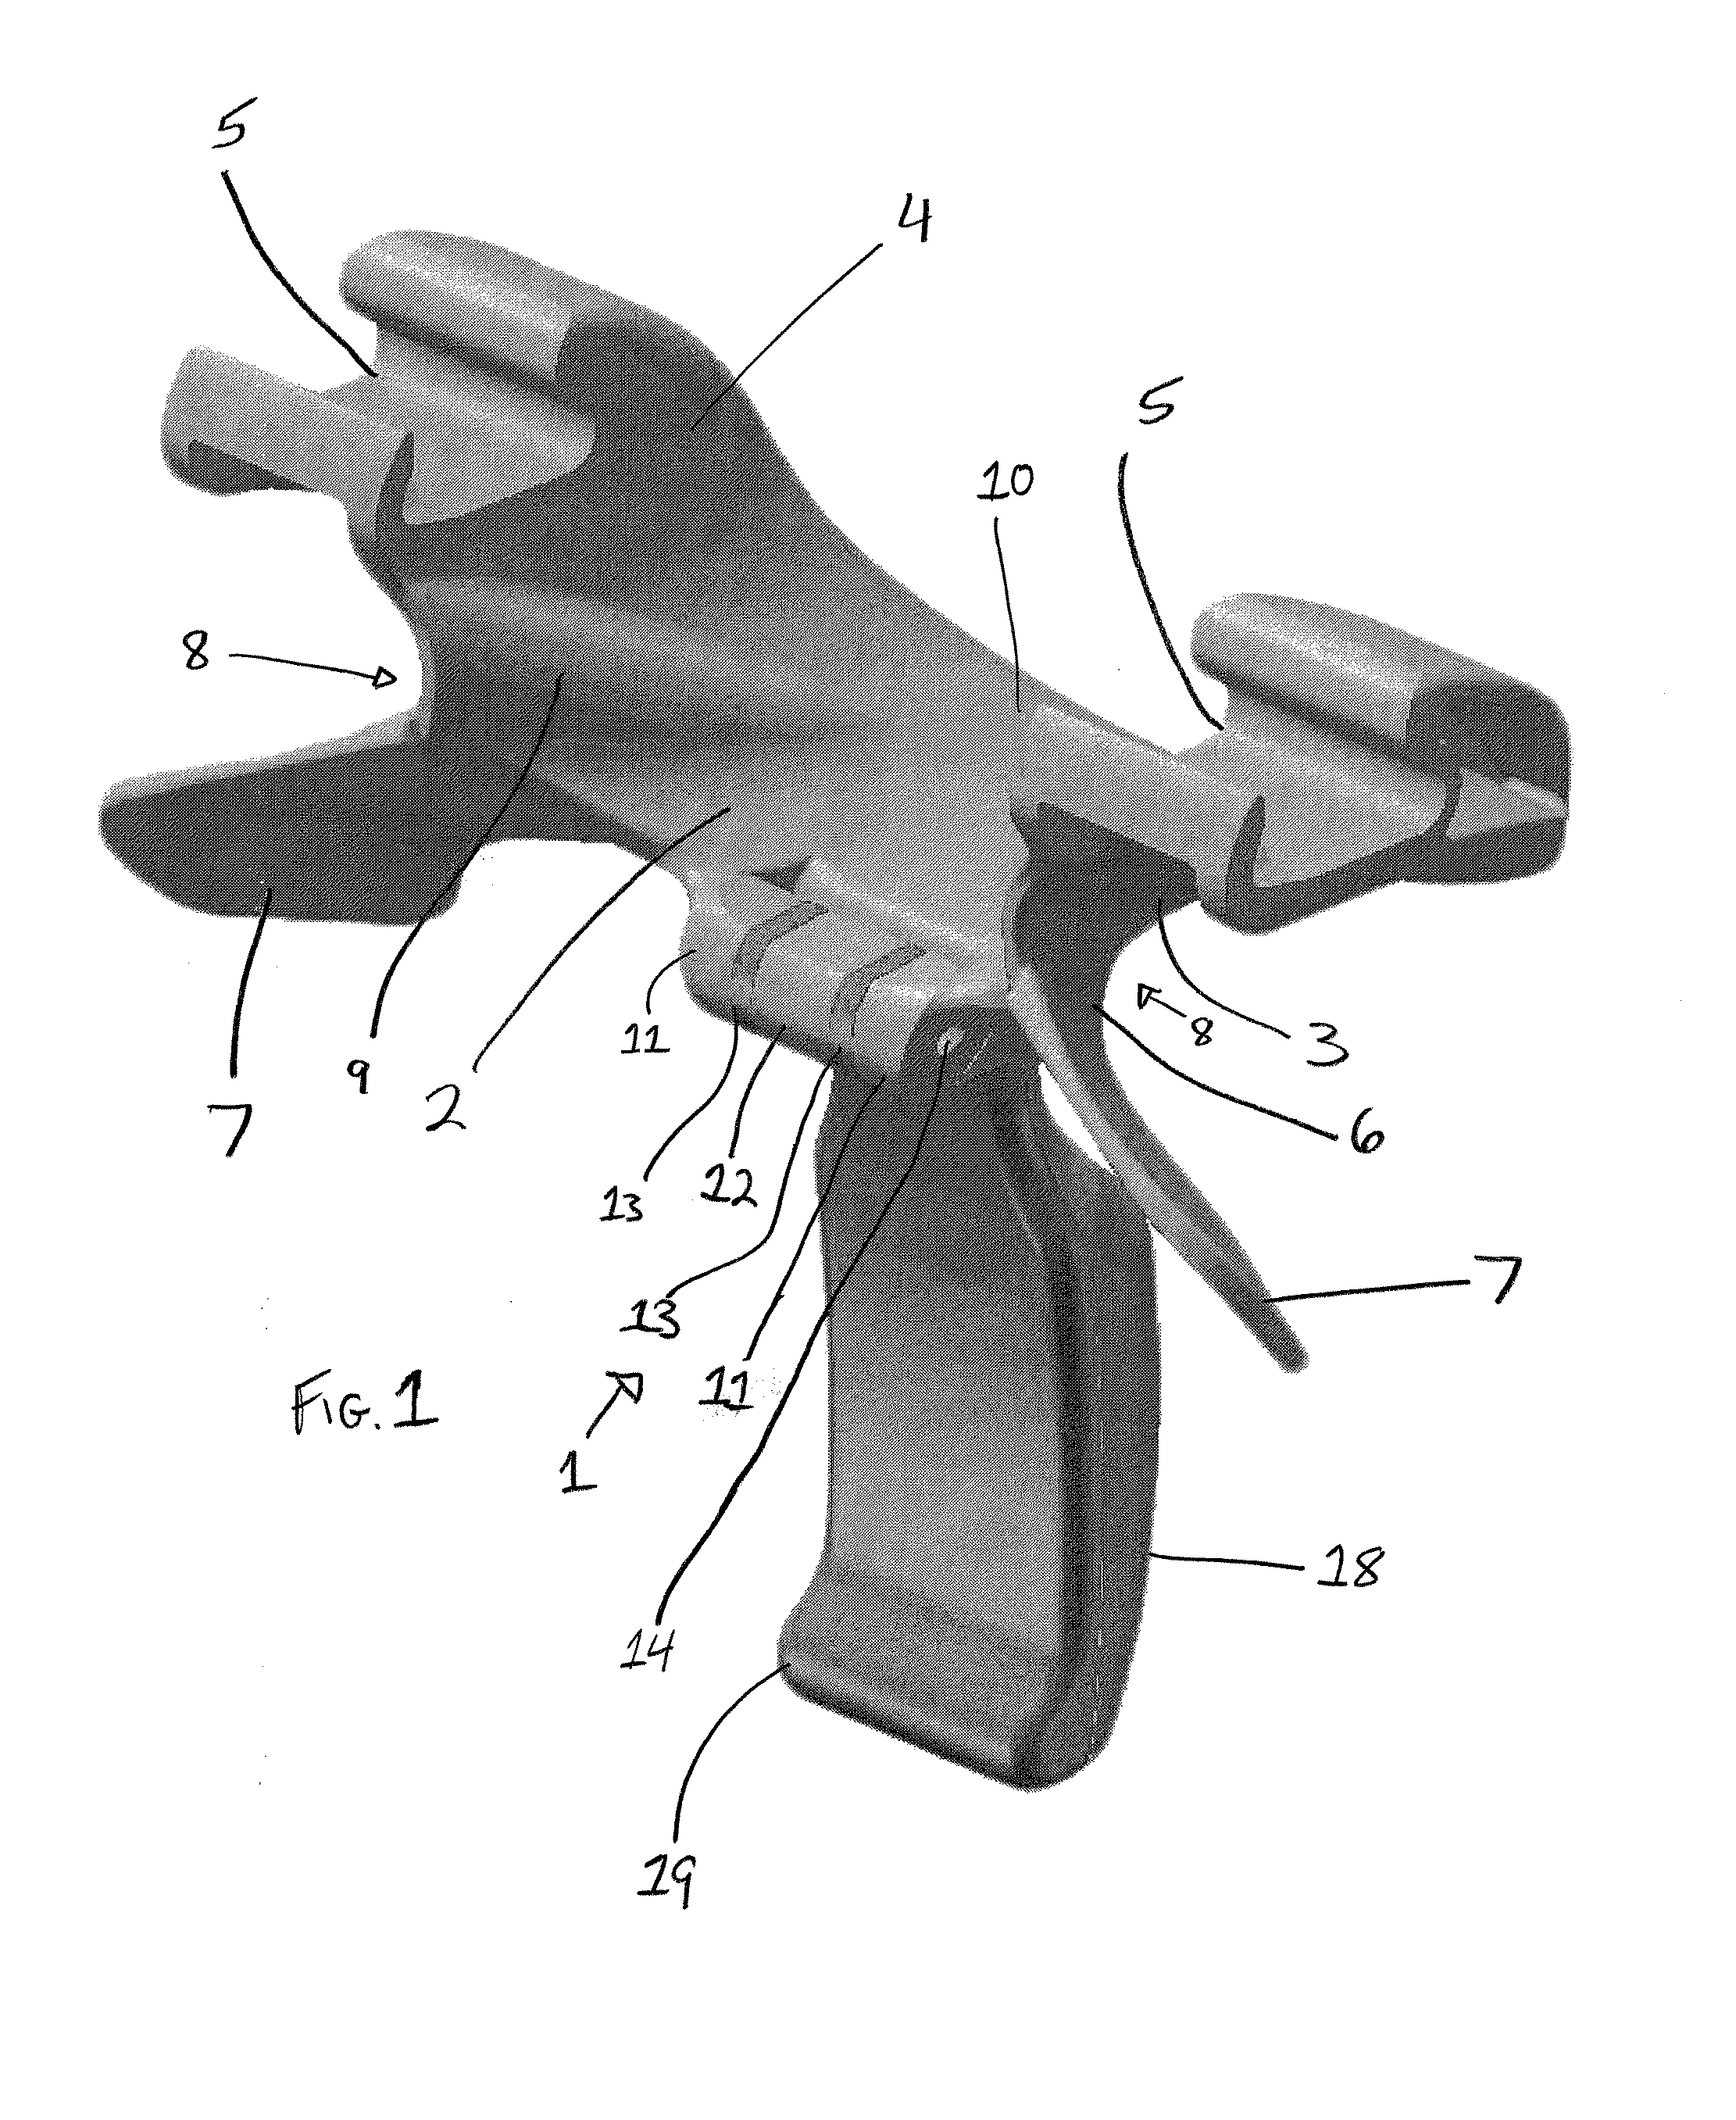 Handleless slingshot with folding storage compartment